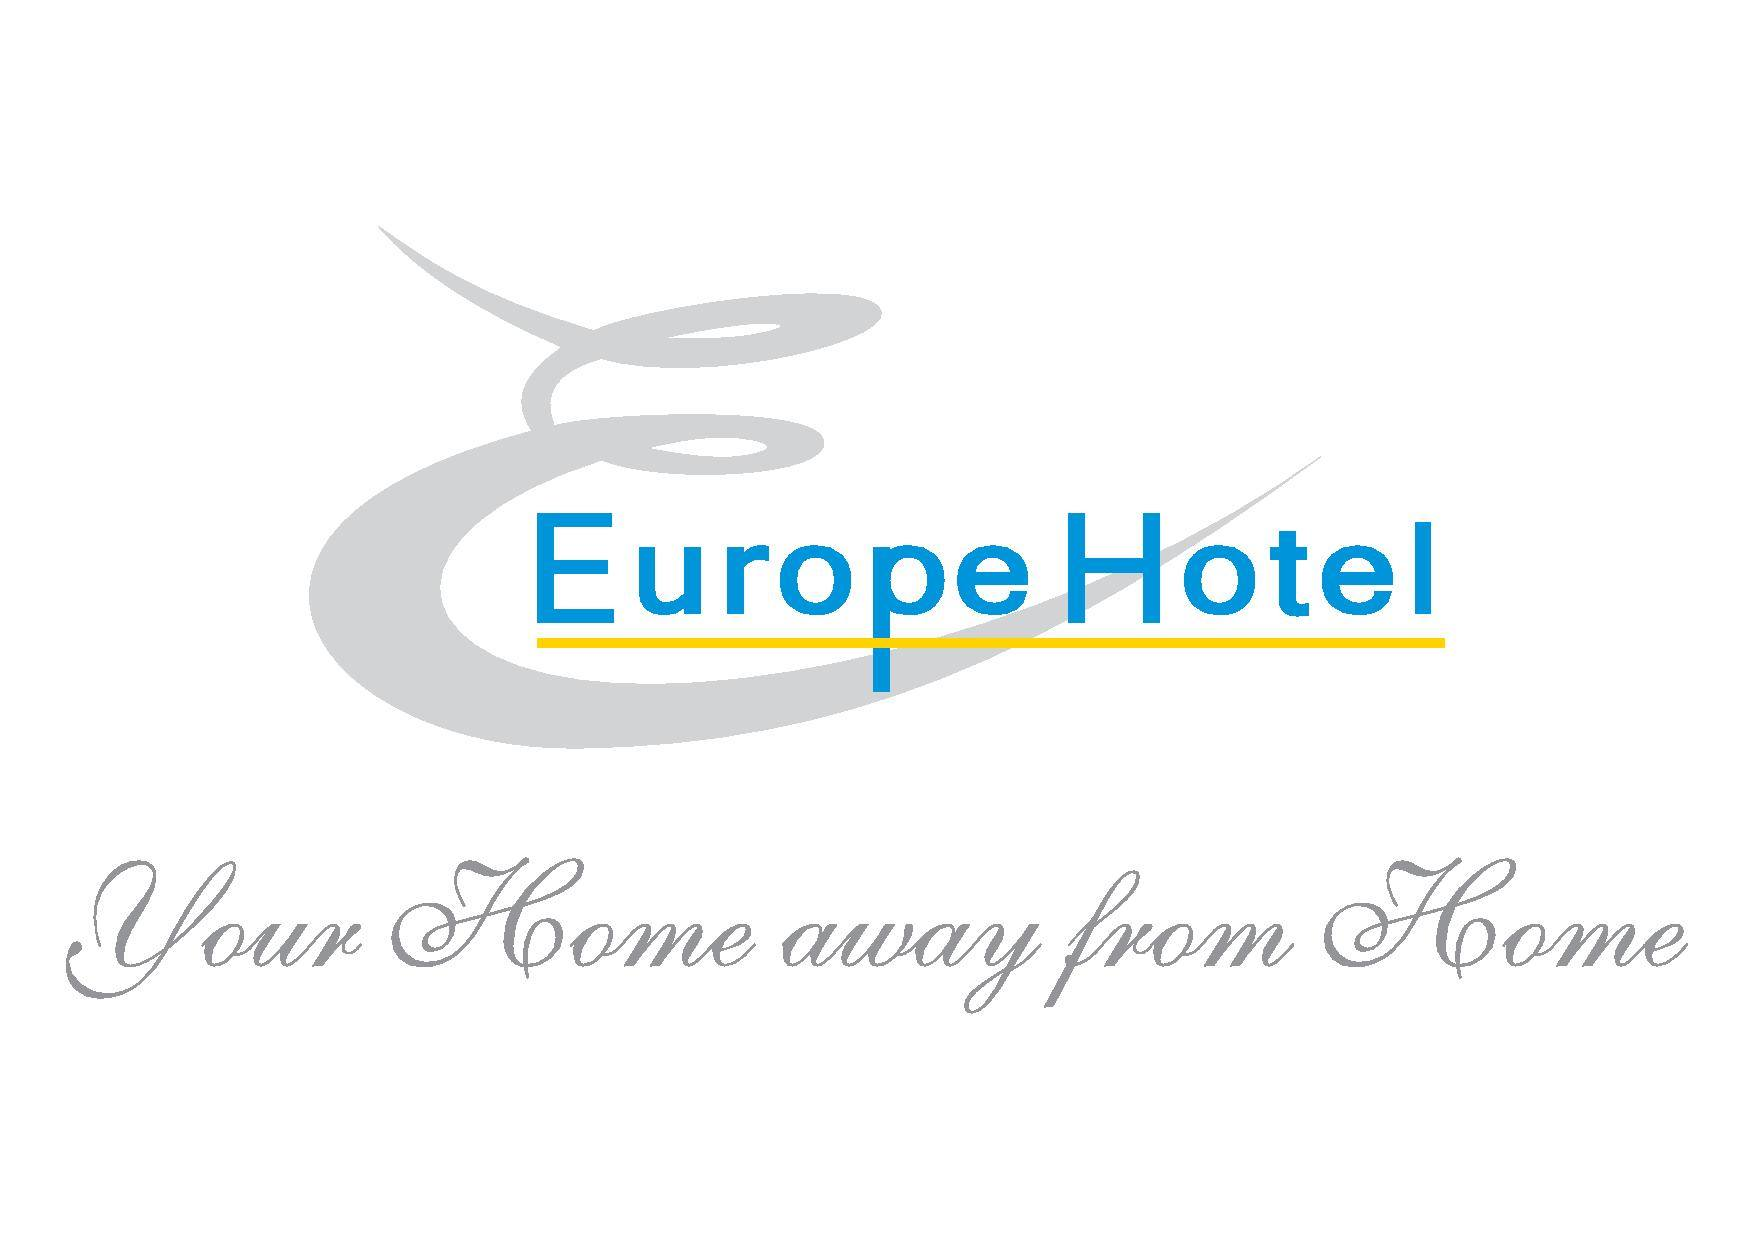 Europe Hotel CJSC